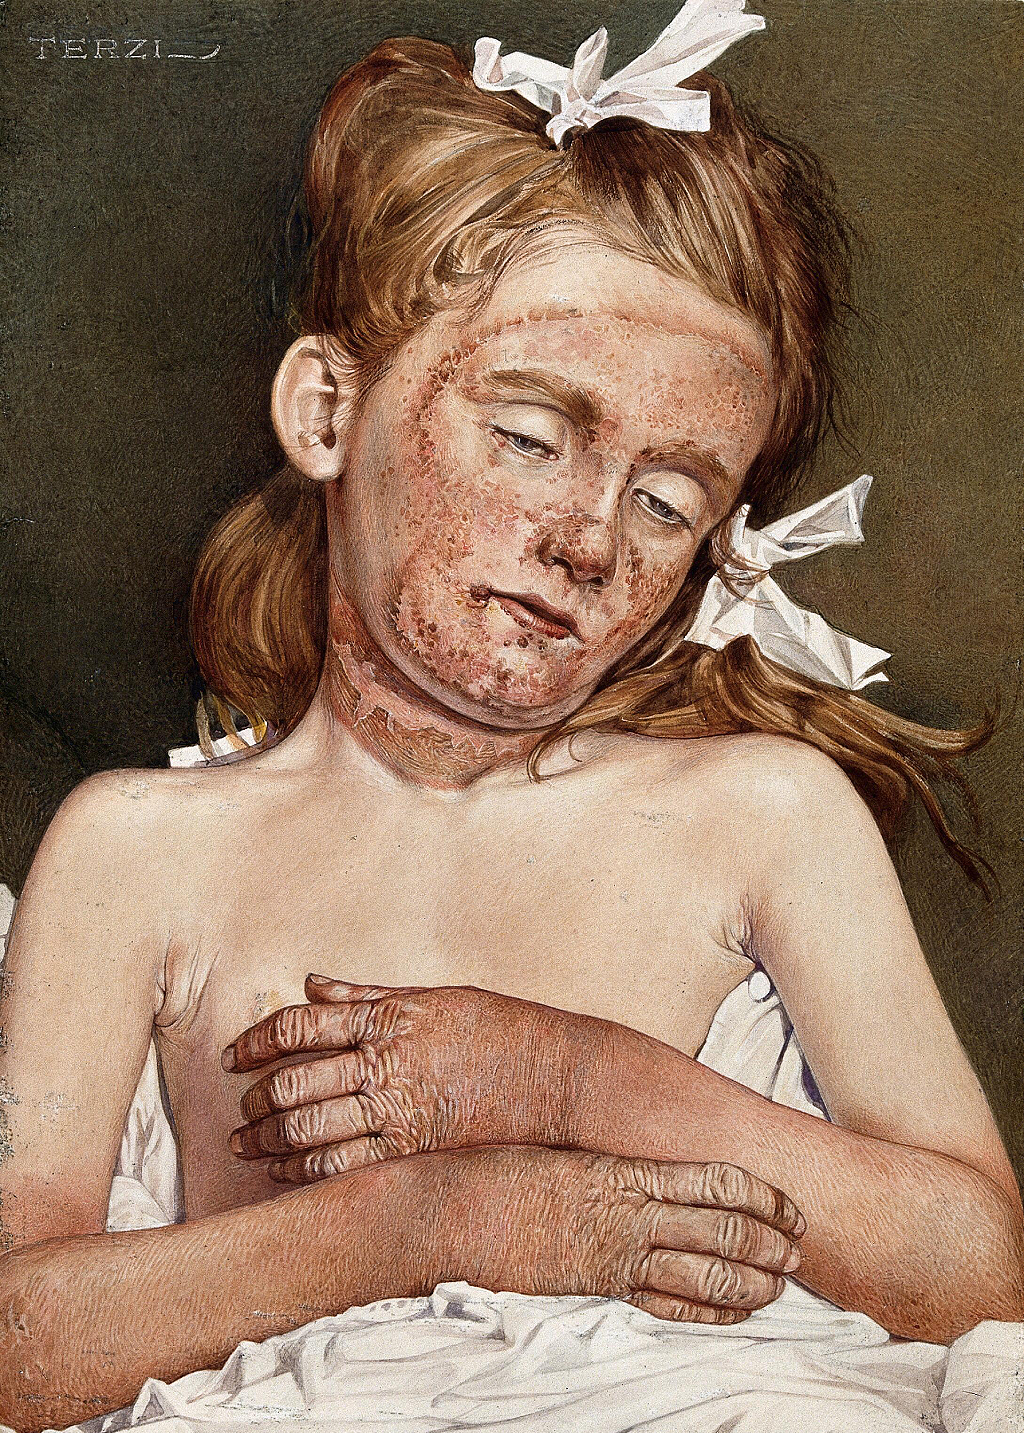 "Una niña en el asilo de Londres que sufre de pelagra crónica". Acuarela de A.J.E. Terzi, 1925.